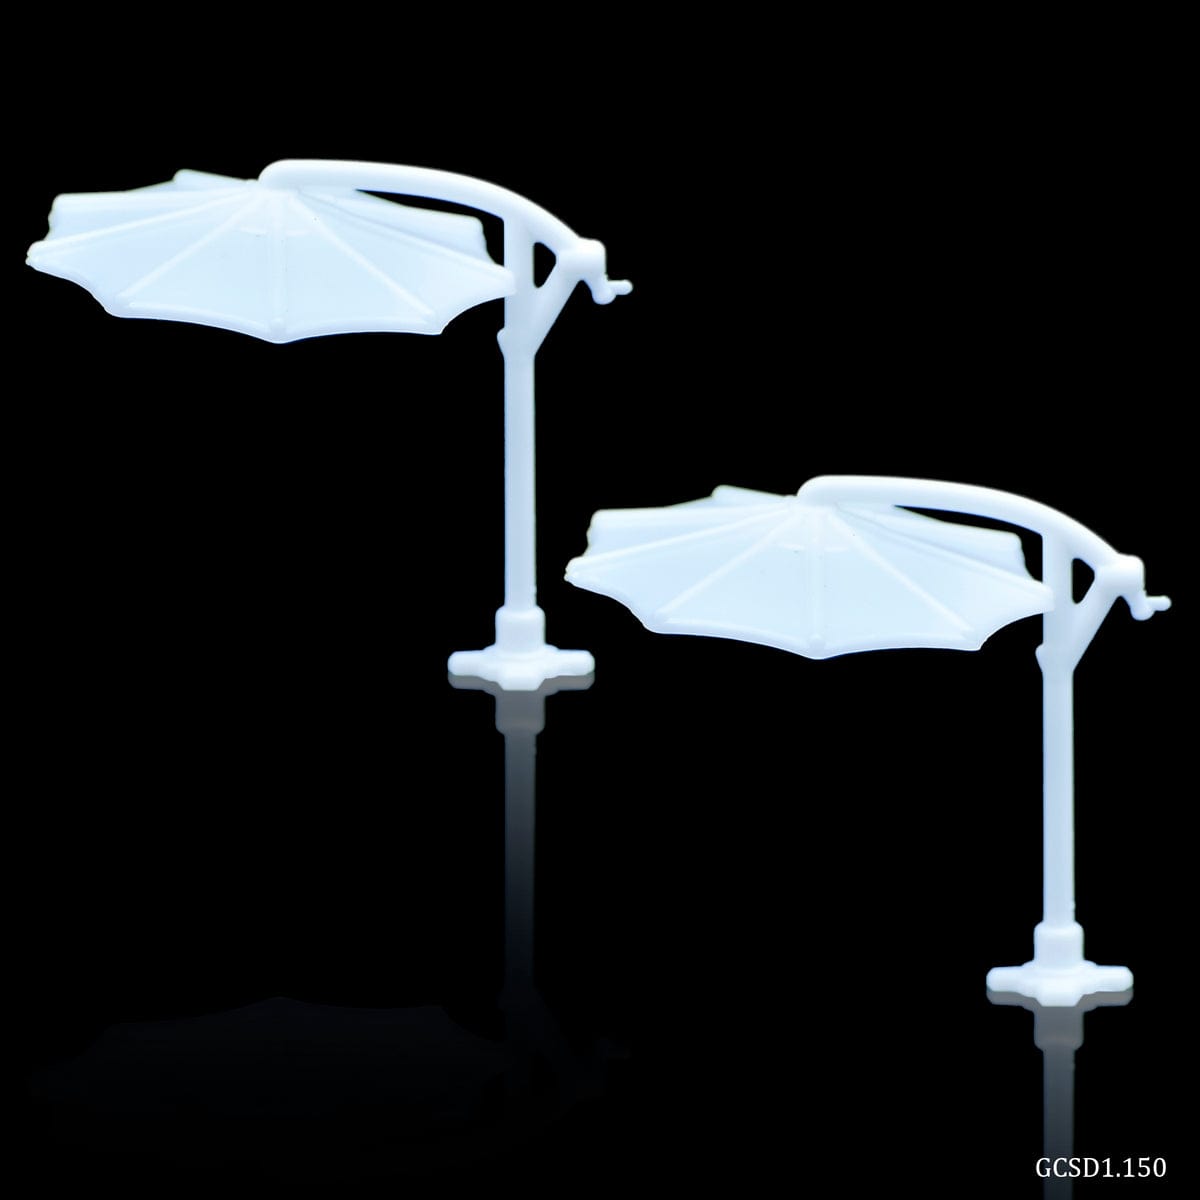 jags-mumbai Miniature Miniature Model Umbrella Set Of 2 Pics GCSD1.150